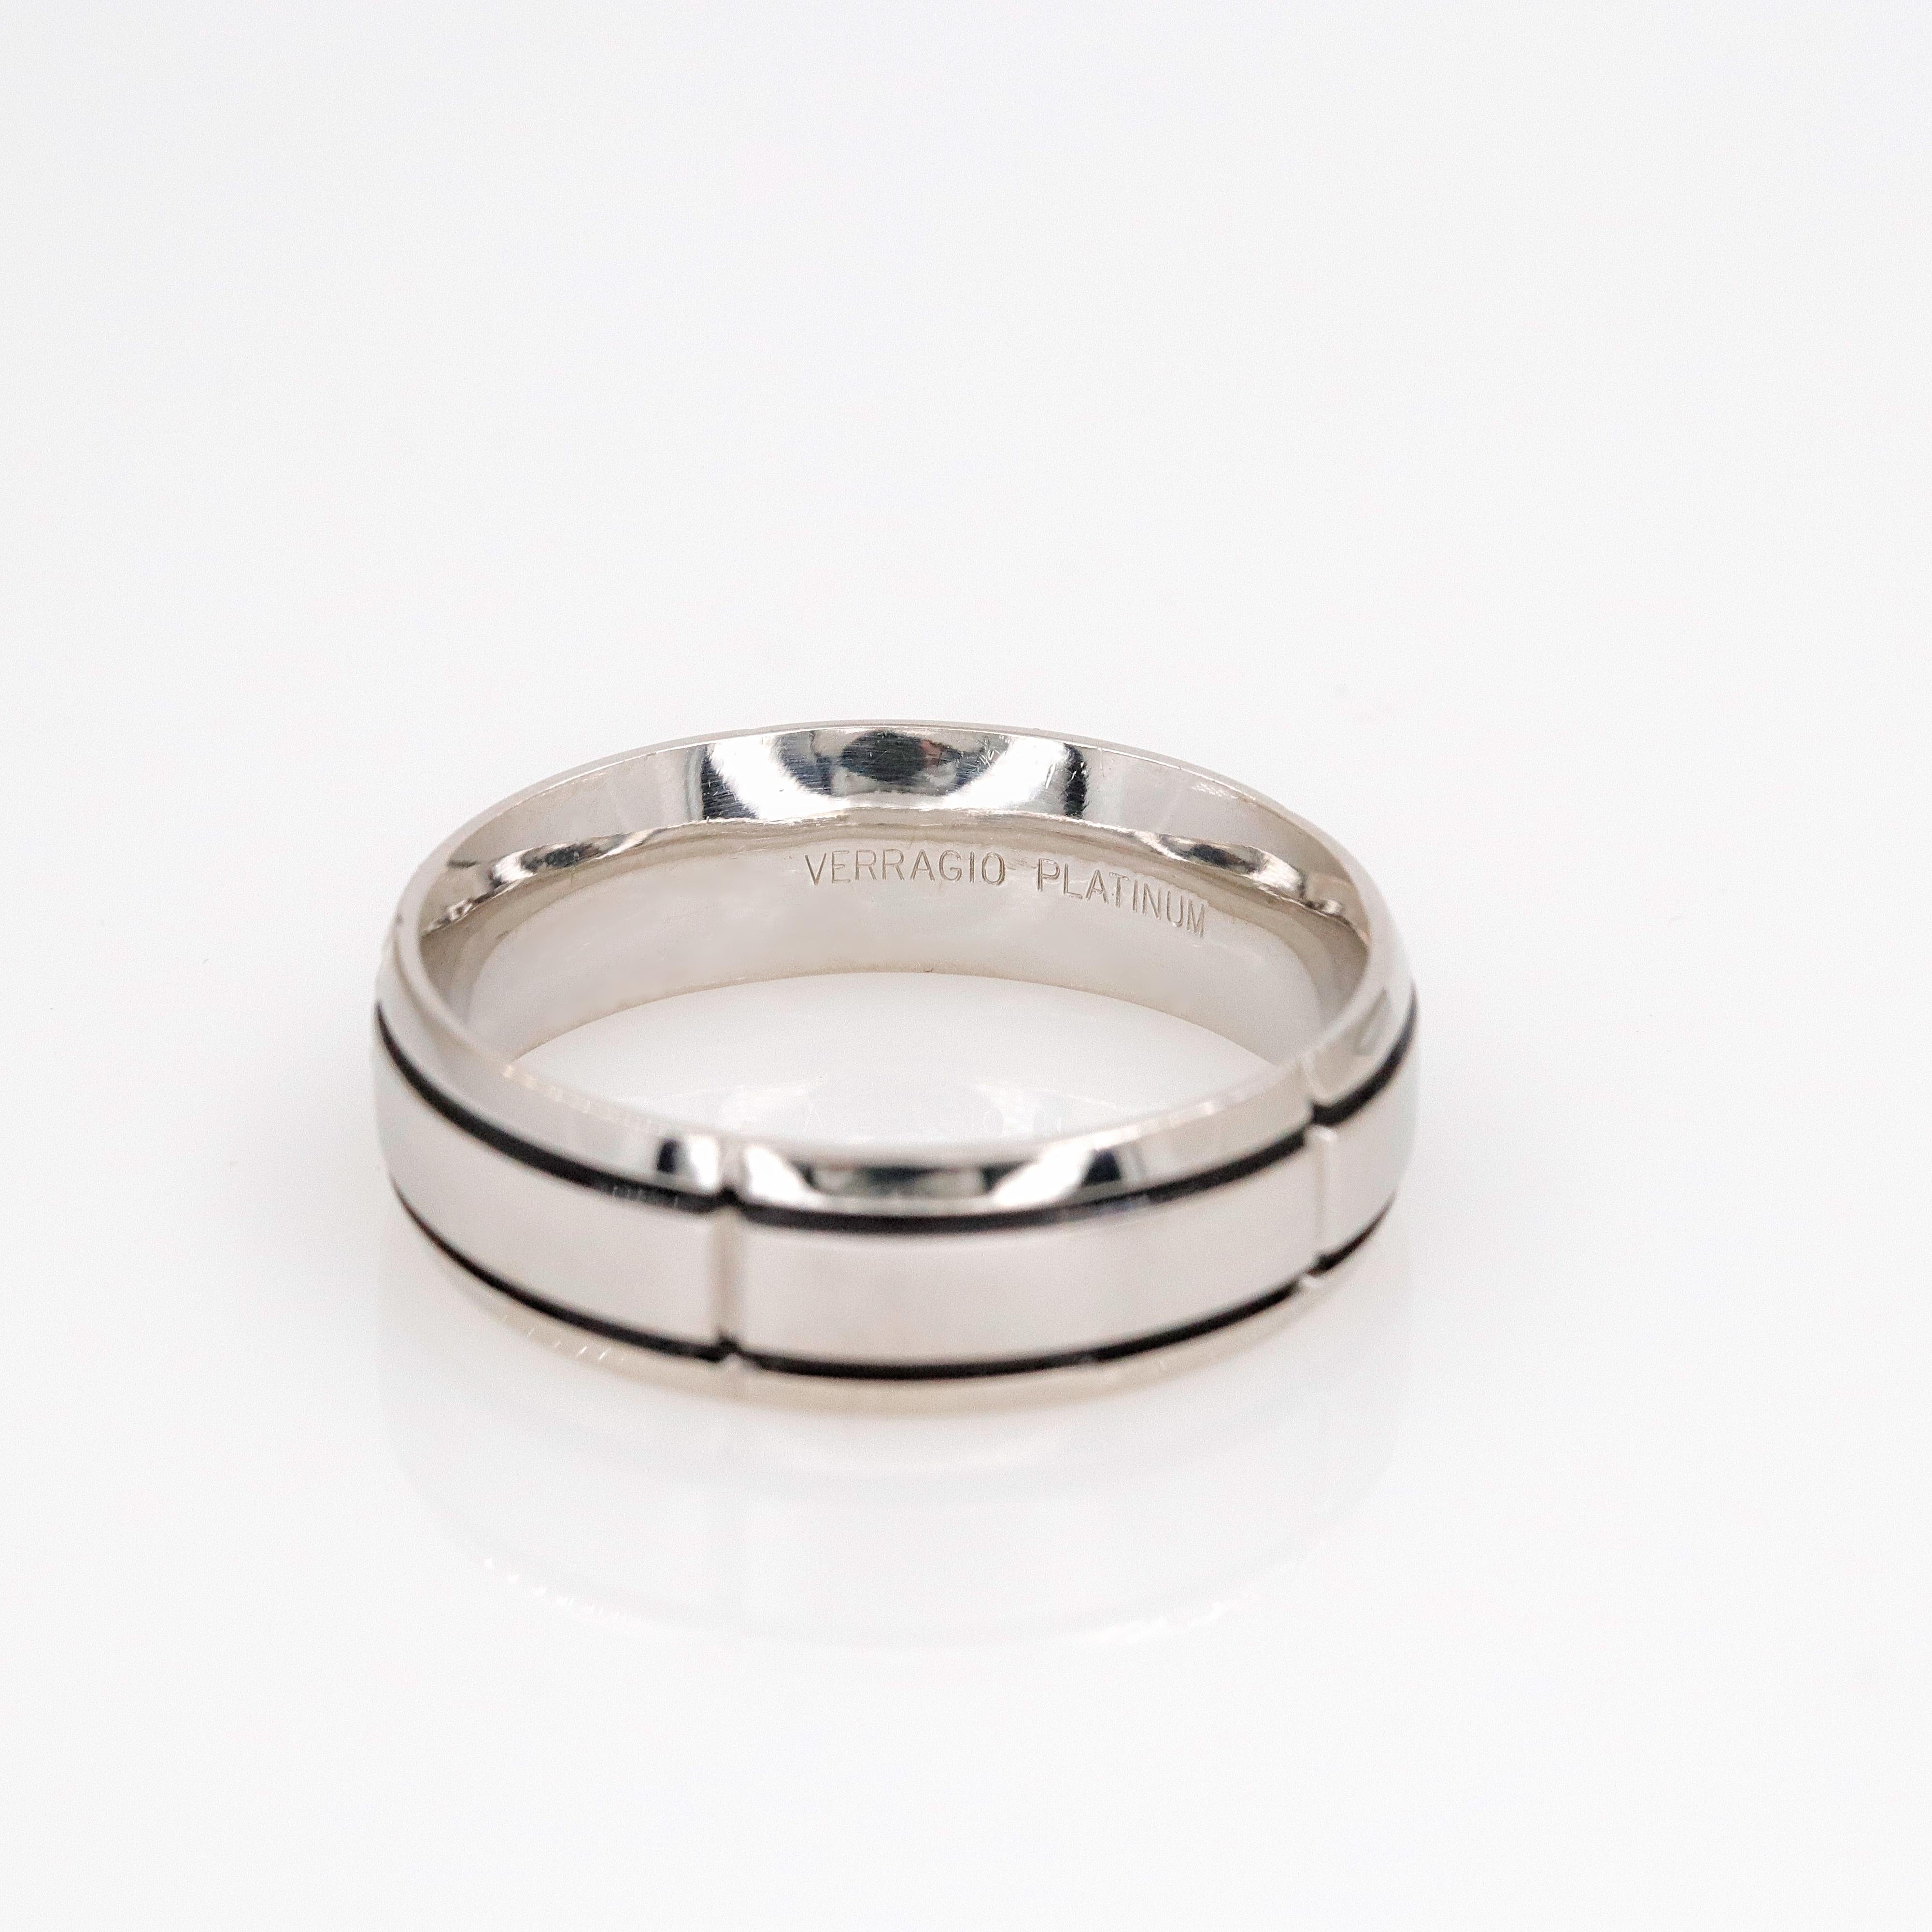 VERRAGIO

Style:  In-Gauge Men's Band Ring
Ref. number:  RU-7005
Metal:  Platinum
Width:  10 MM
Materials:  Platinum with Black Enamel Filler
Hallmark:  